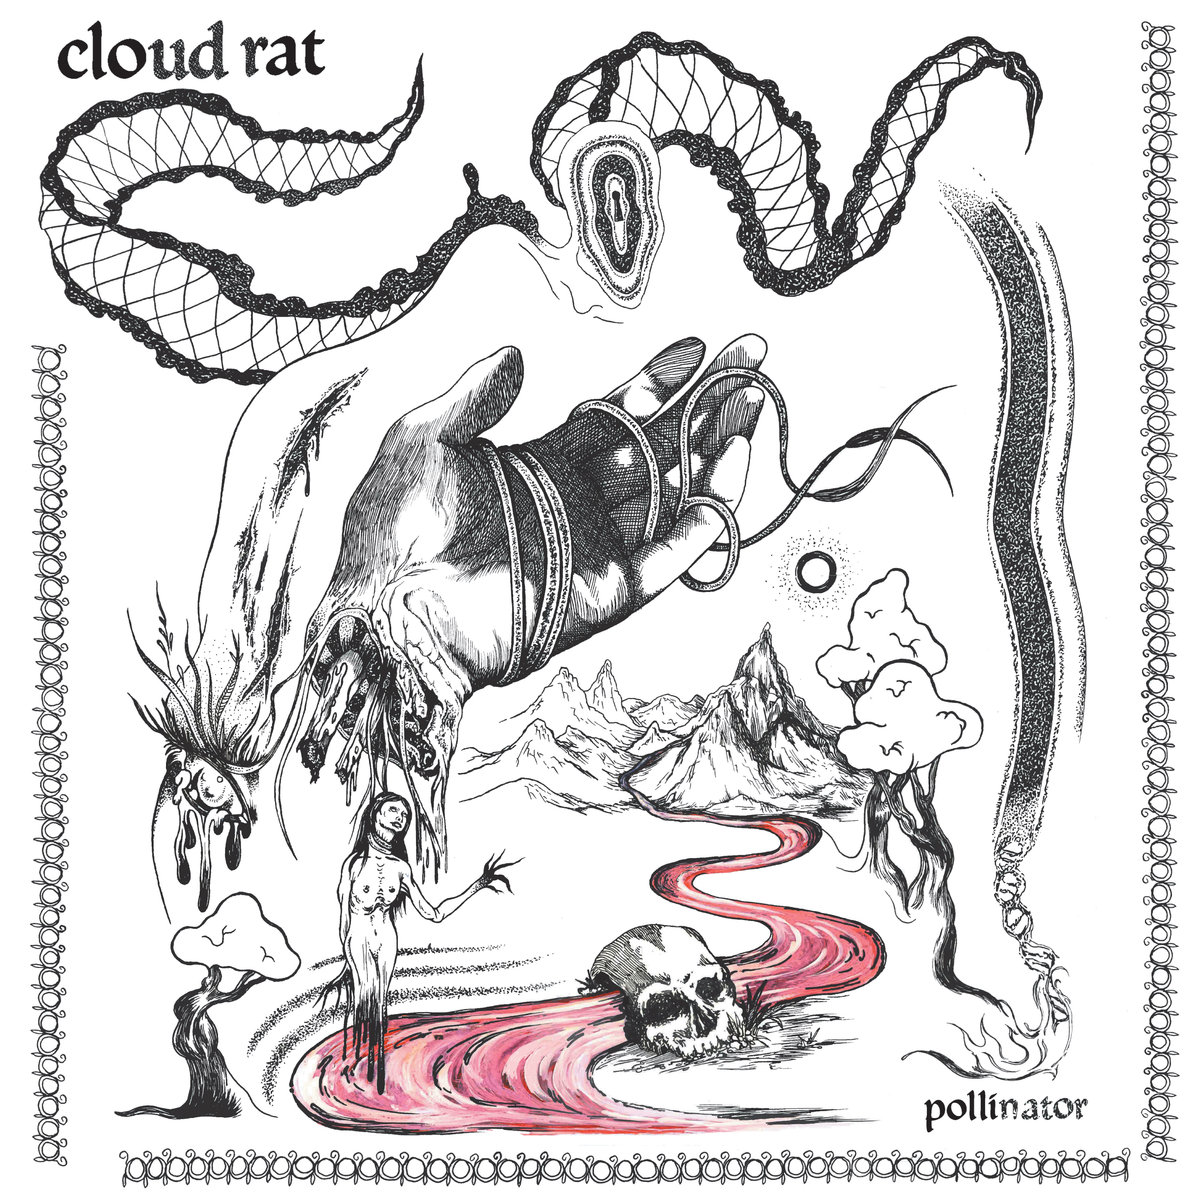 CLOUD RAT - Pollinator cover 